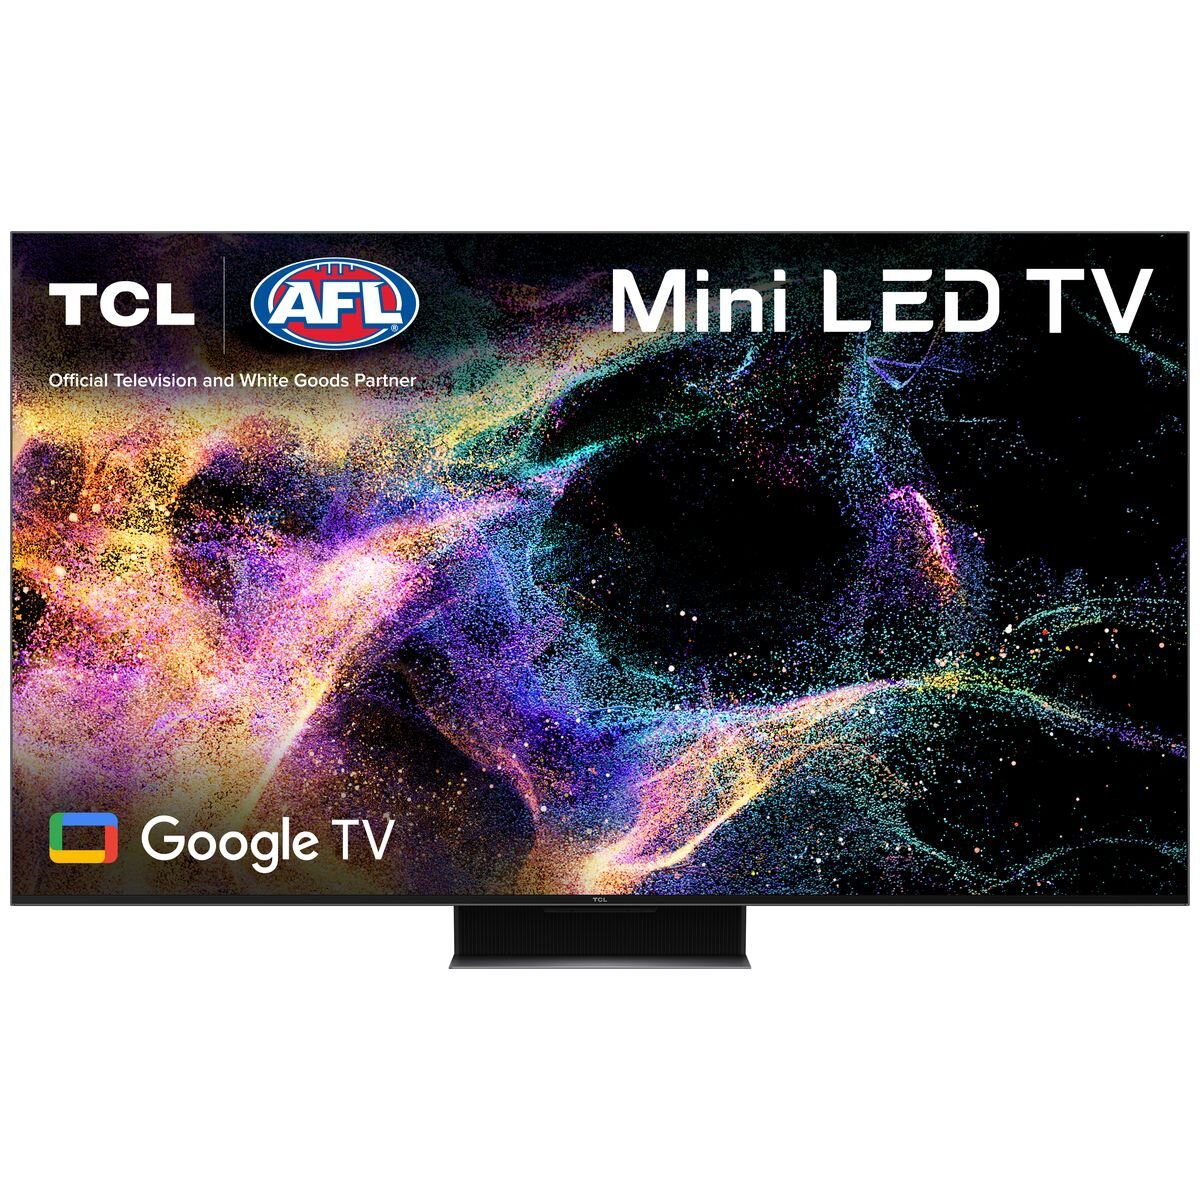 QLED 65 TCL 65C845 Miniled 4K HDR Smart TV Google TV — TCL.cl